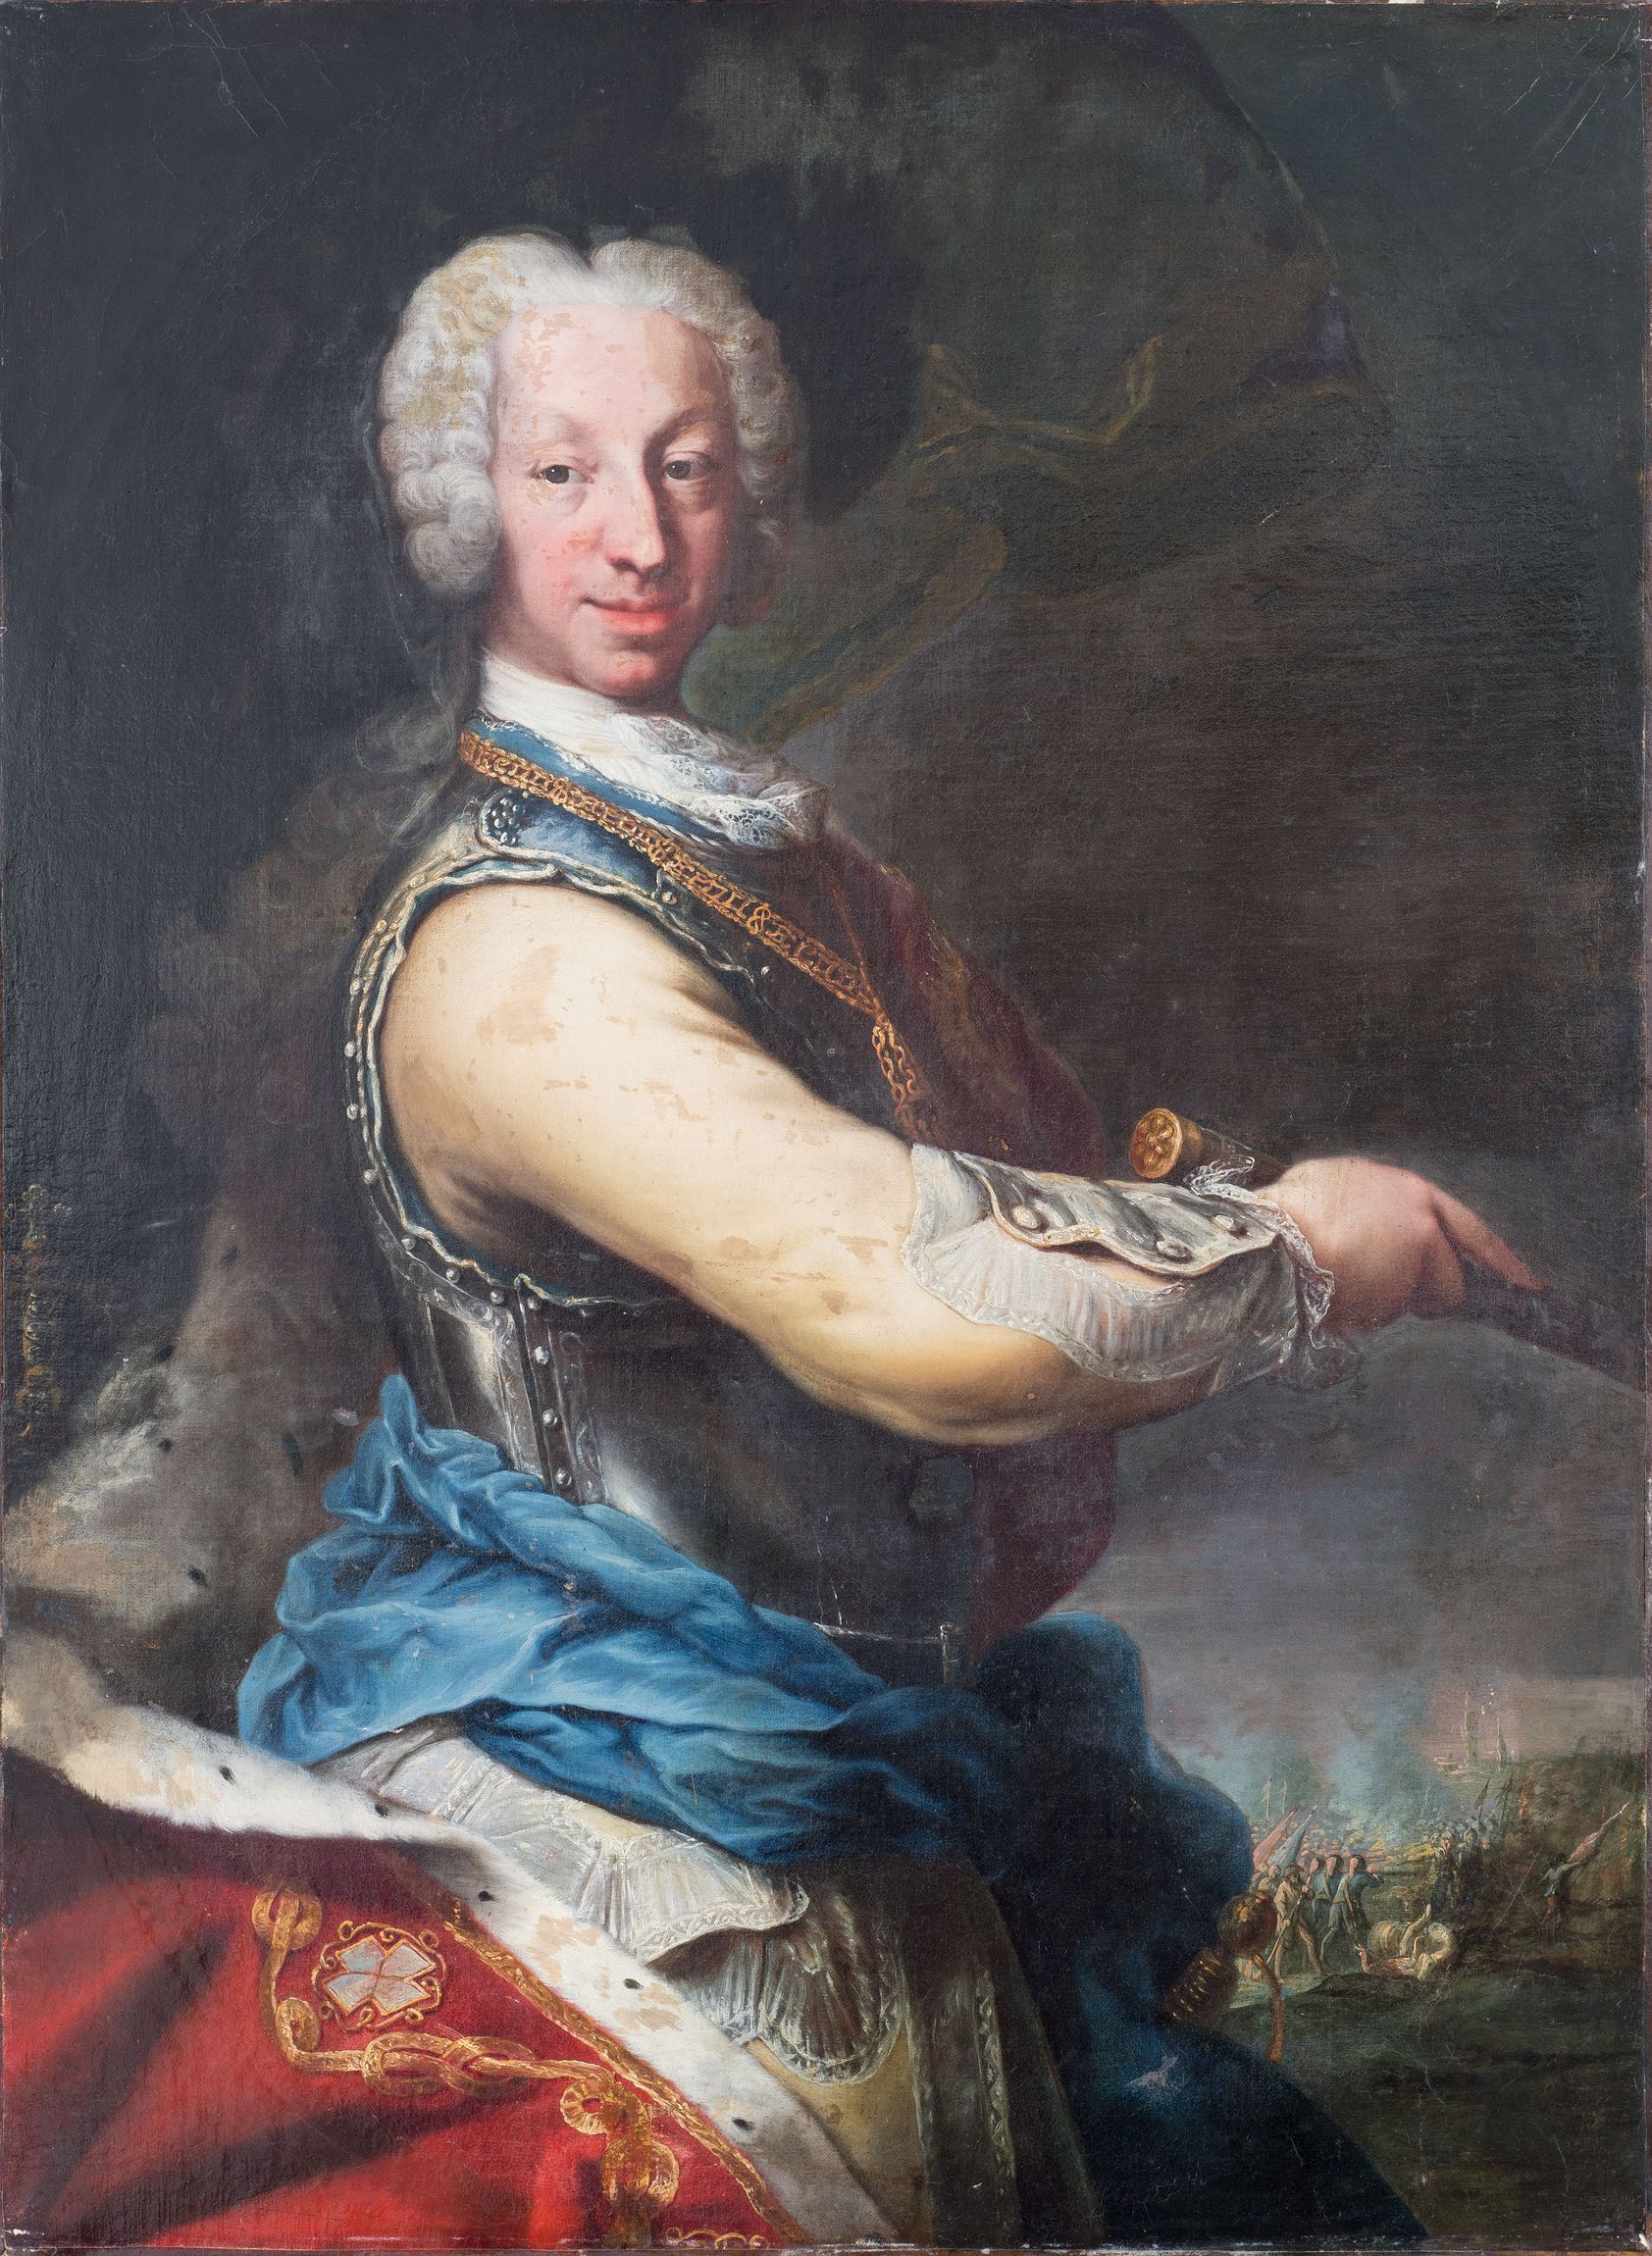 Portrait de Charles-Emmanuel III (1701-1773), roi de Sardaigne